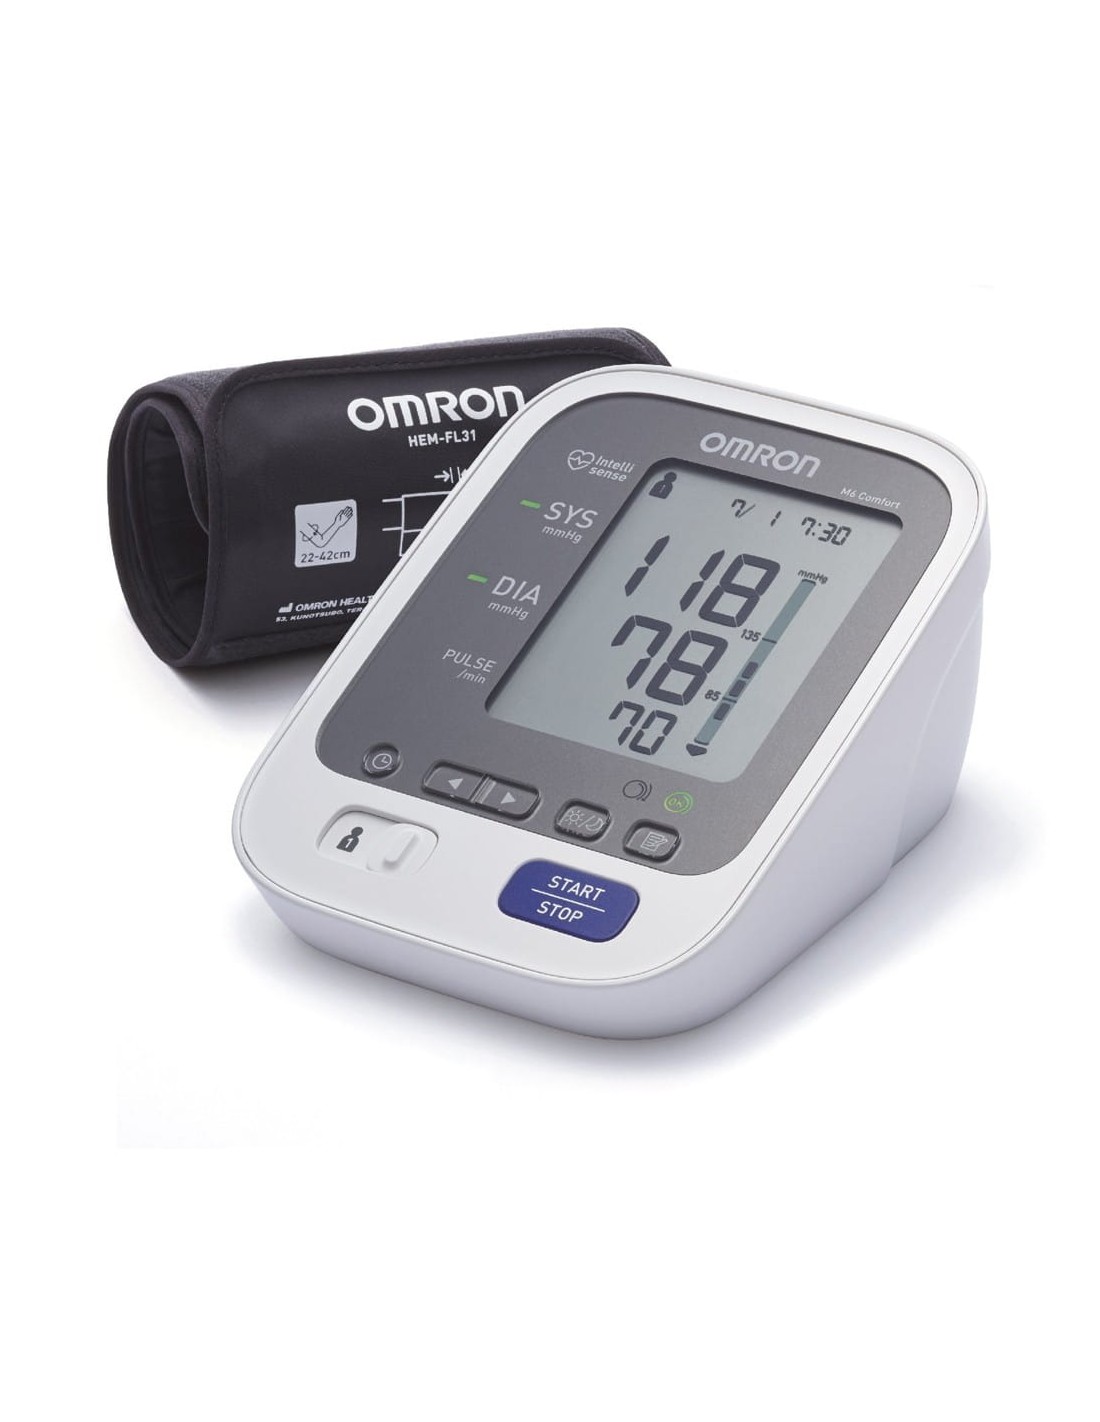 Tensiómetro digital OMRON M3 - Sanisus Medical